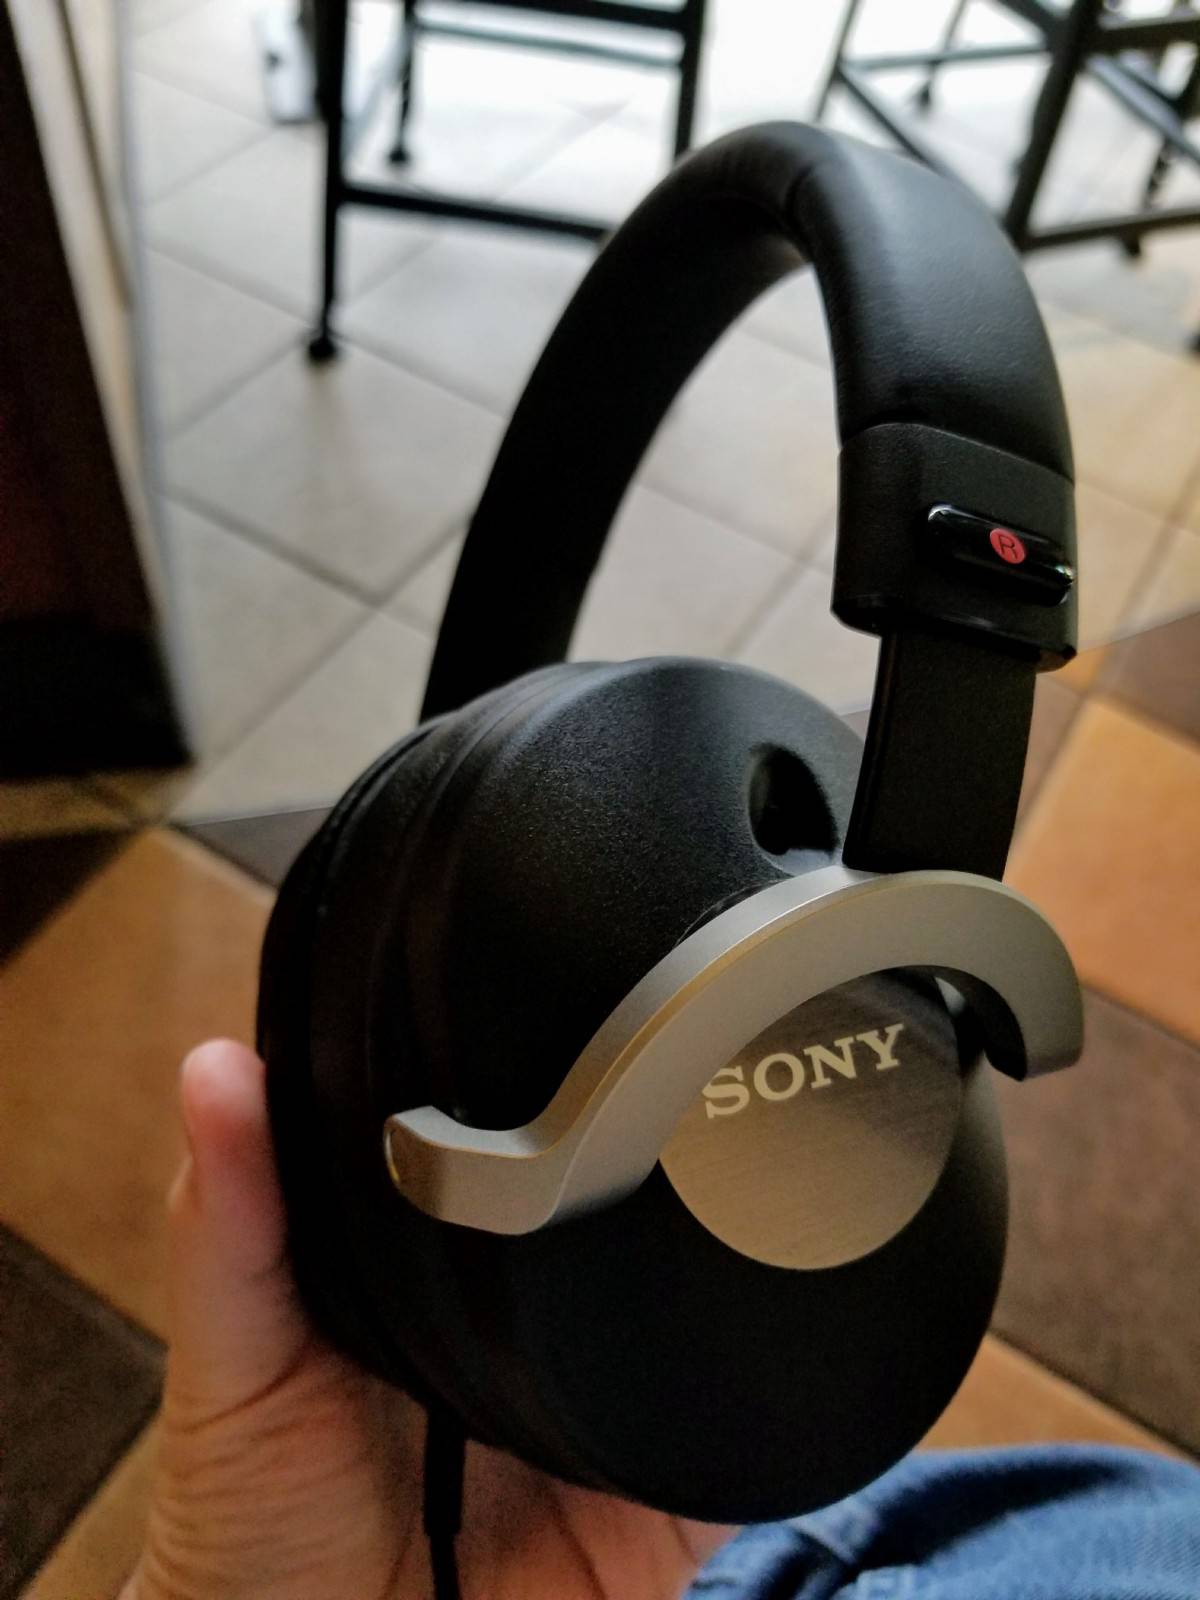 Sony MDR-7510